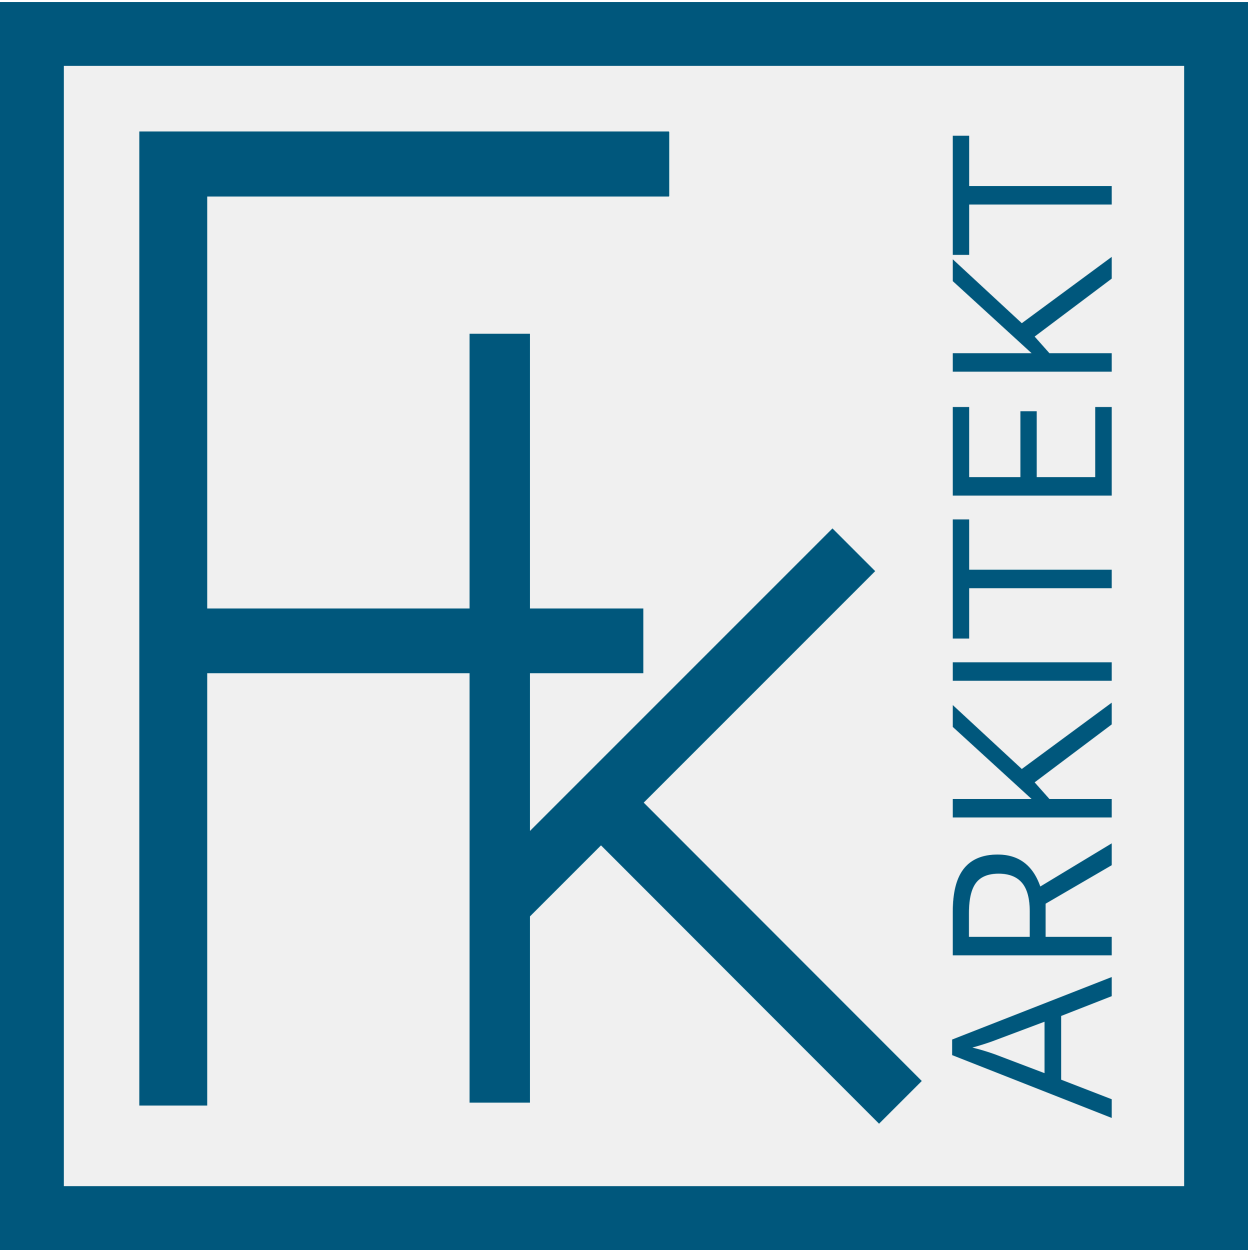 FRANK-ARK | Frank J. Martinez Arquitecto